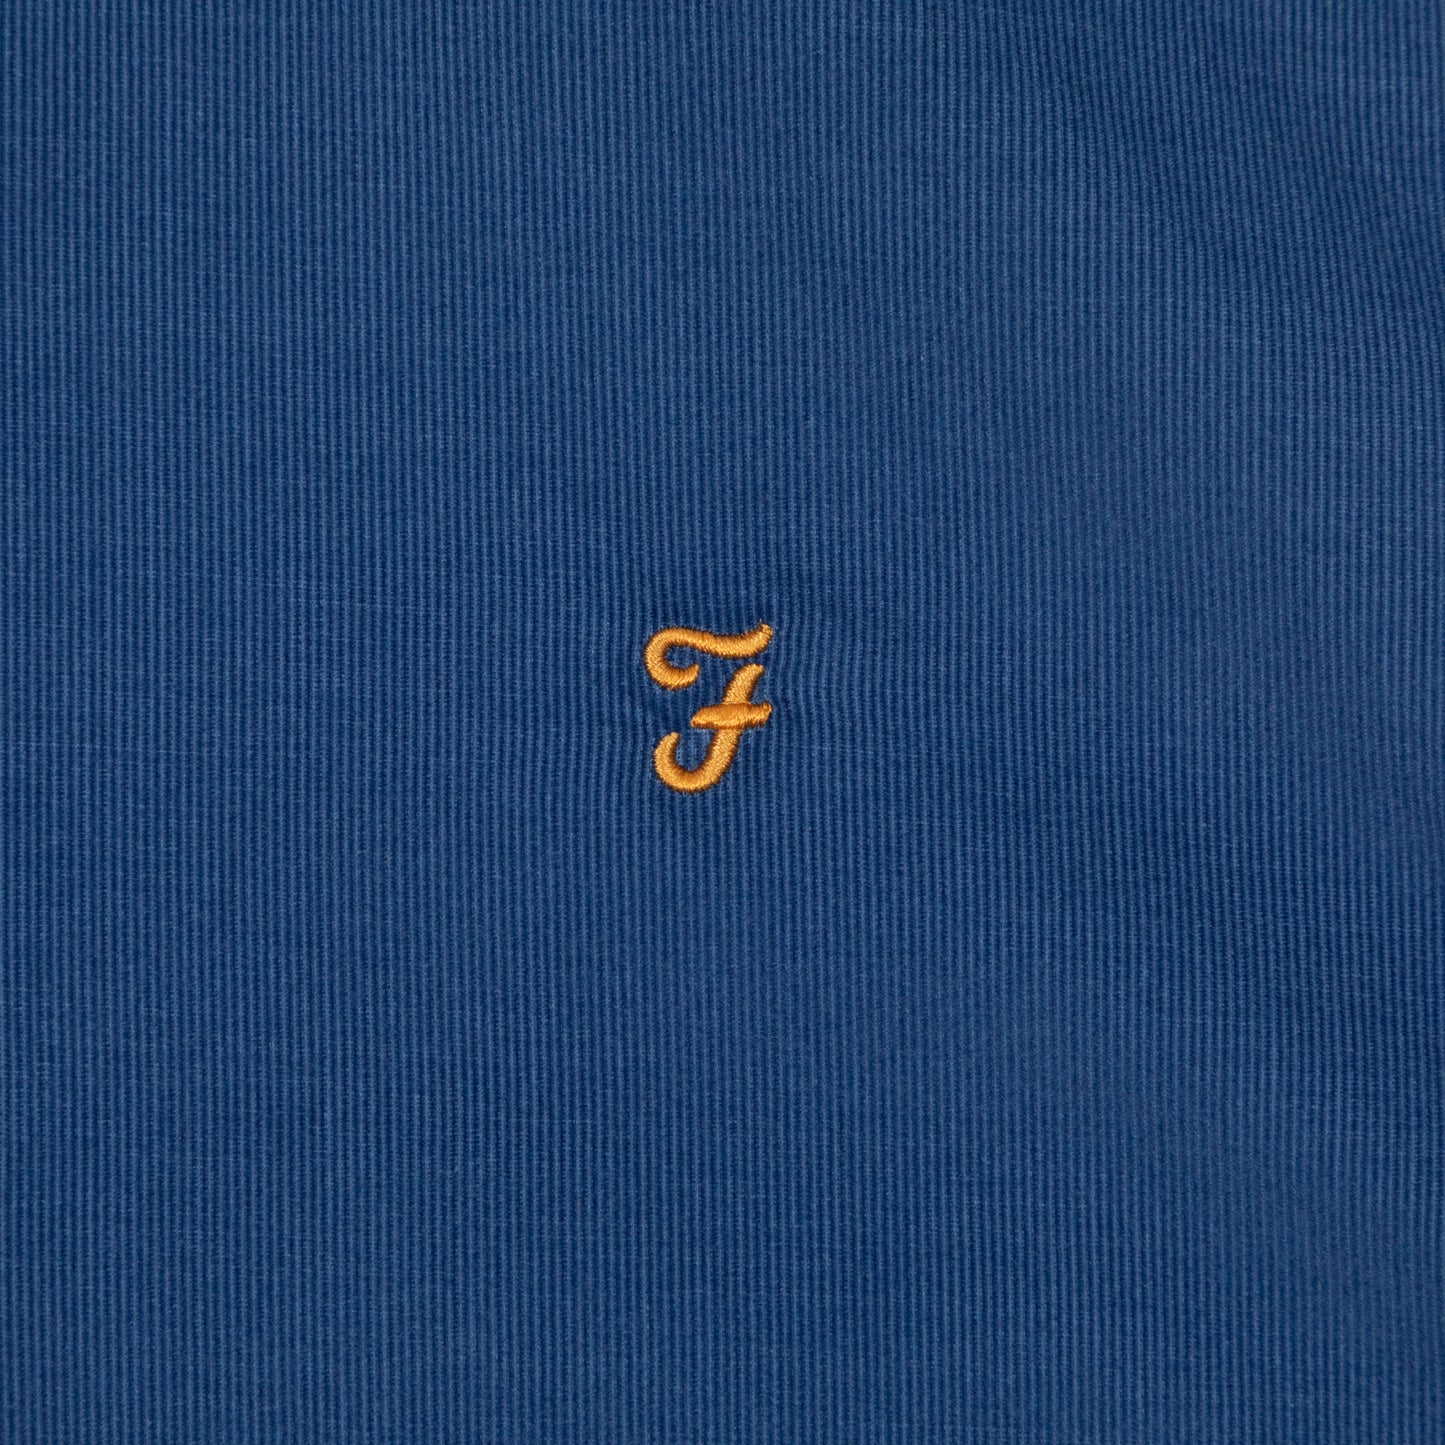 FARAH Fontella Corduroy Shirt in BLUE